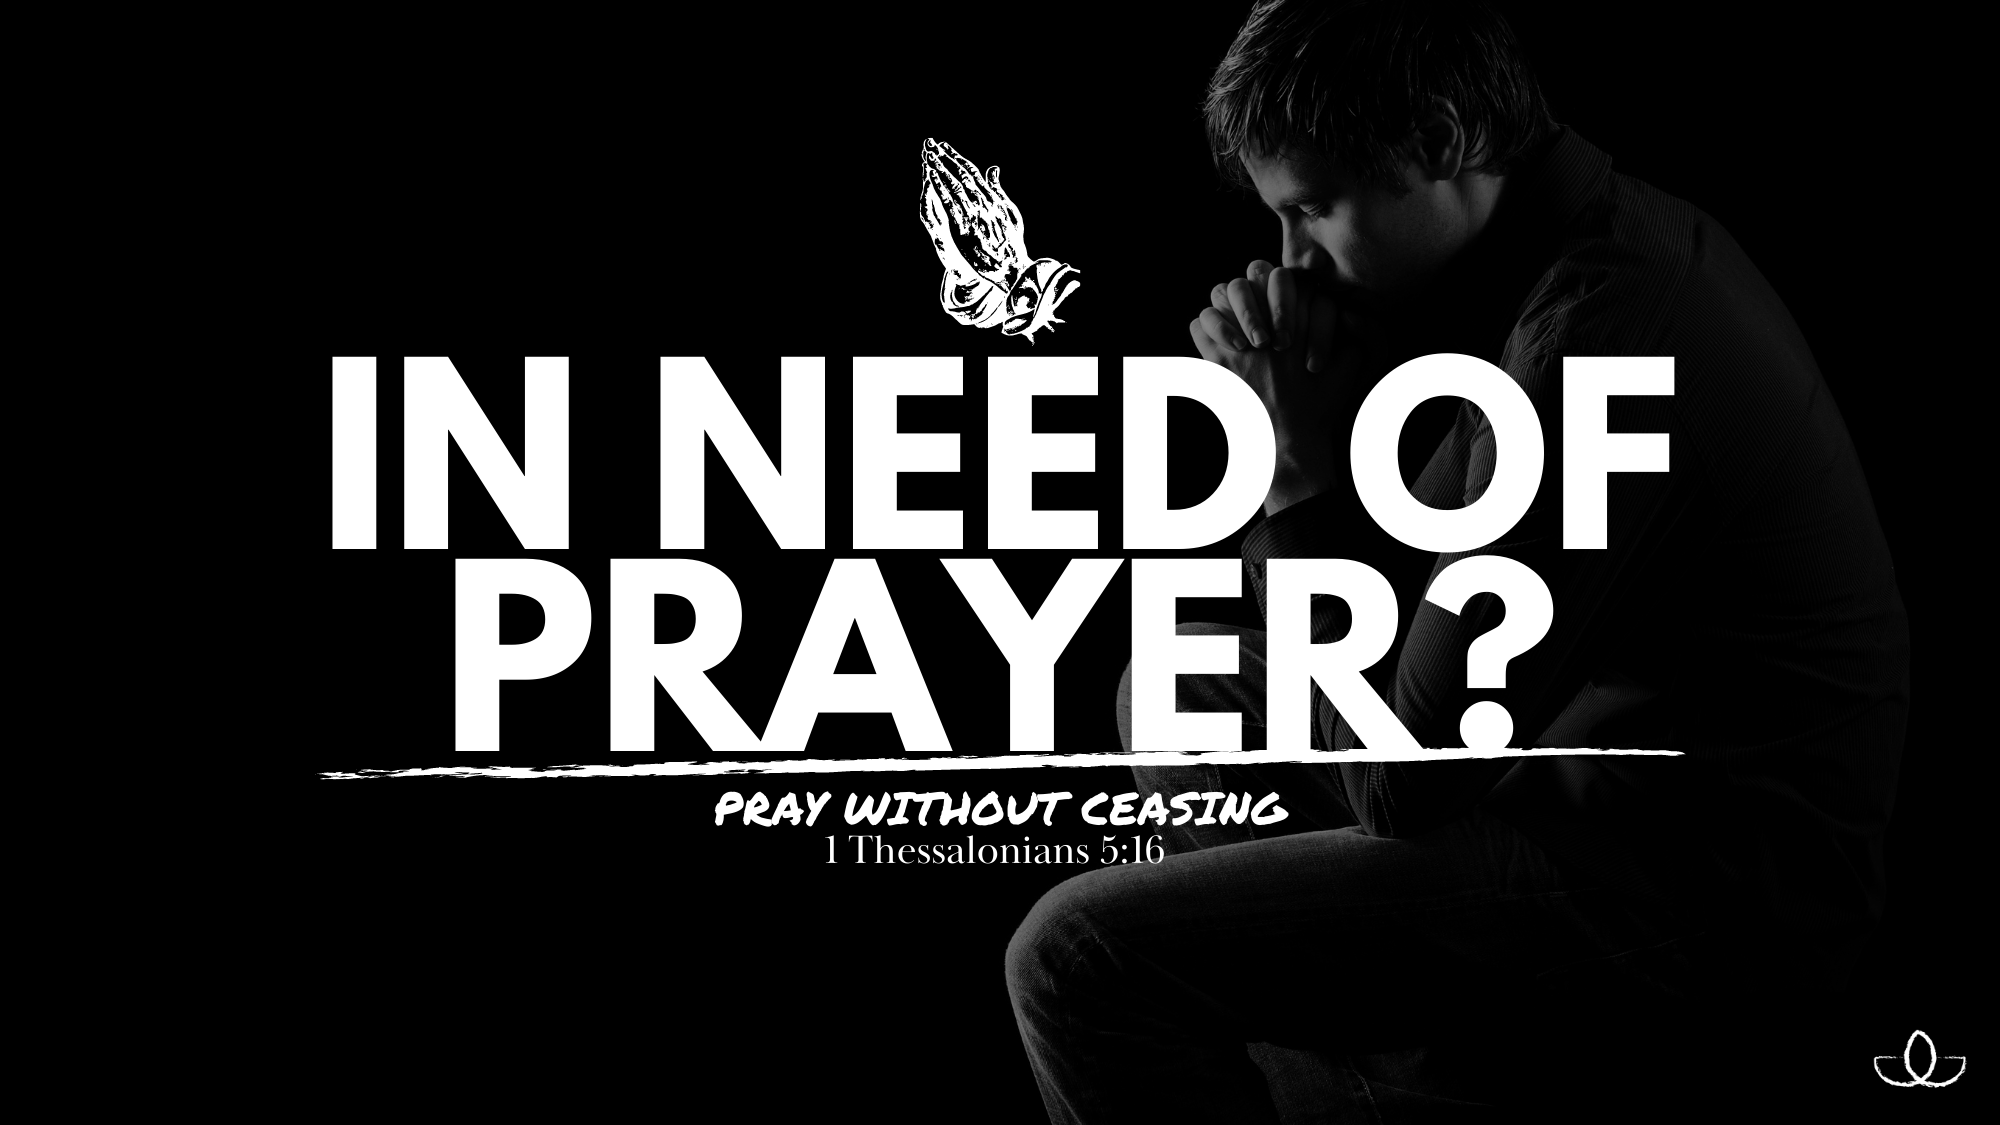 Prayer